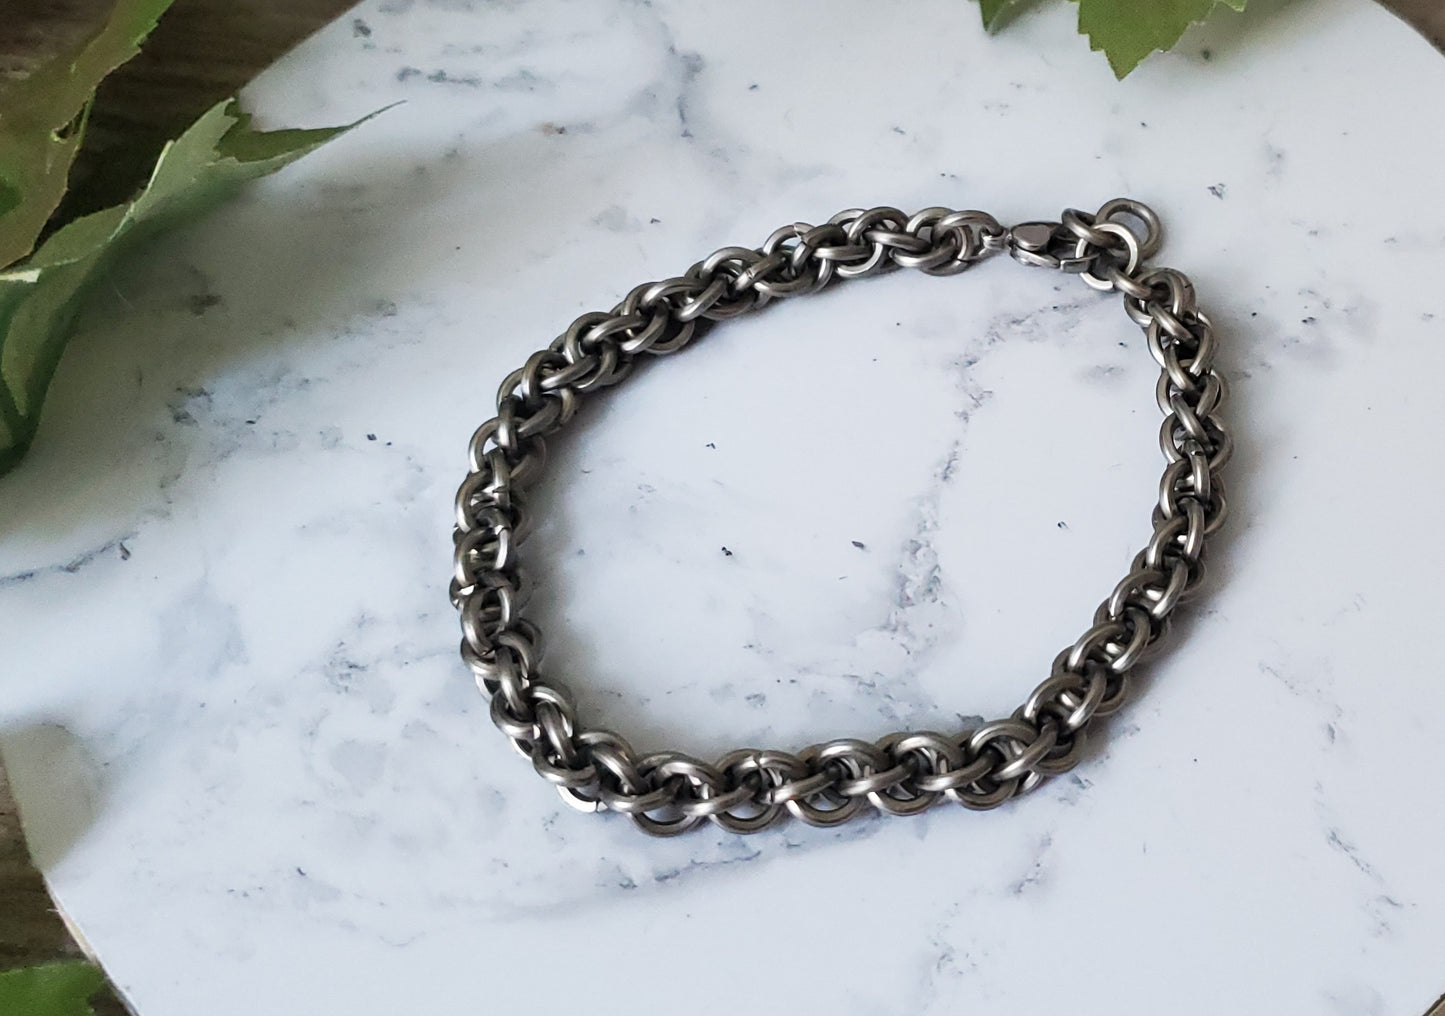 Stainless Steel Bracelet - Jens Pind Linkage Weave, 8" Long, Unisex, Hypoallergenic, Edgy Rock Chain or Biker Chain